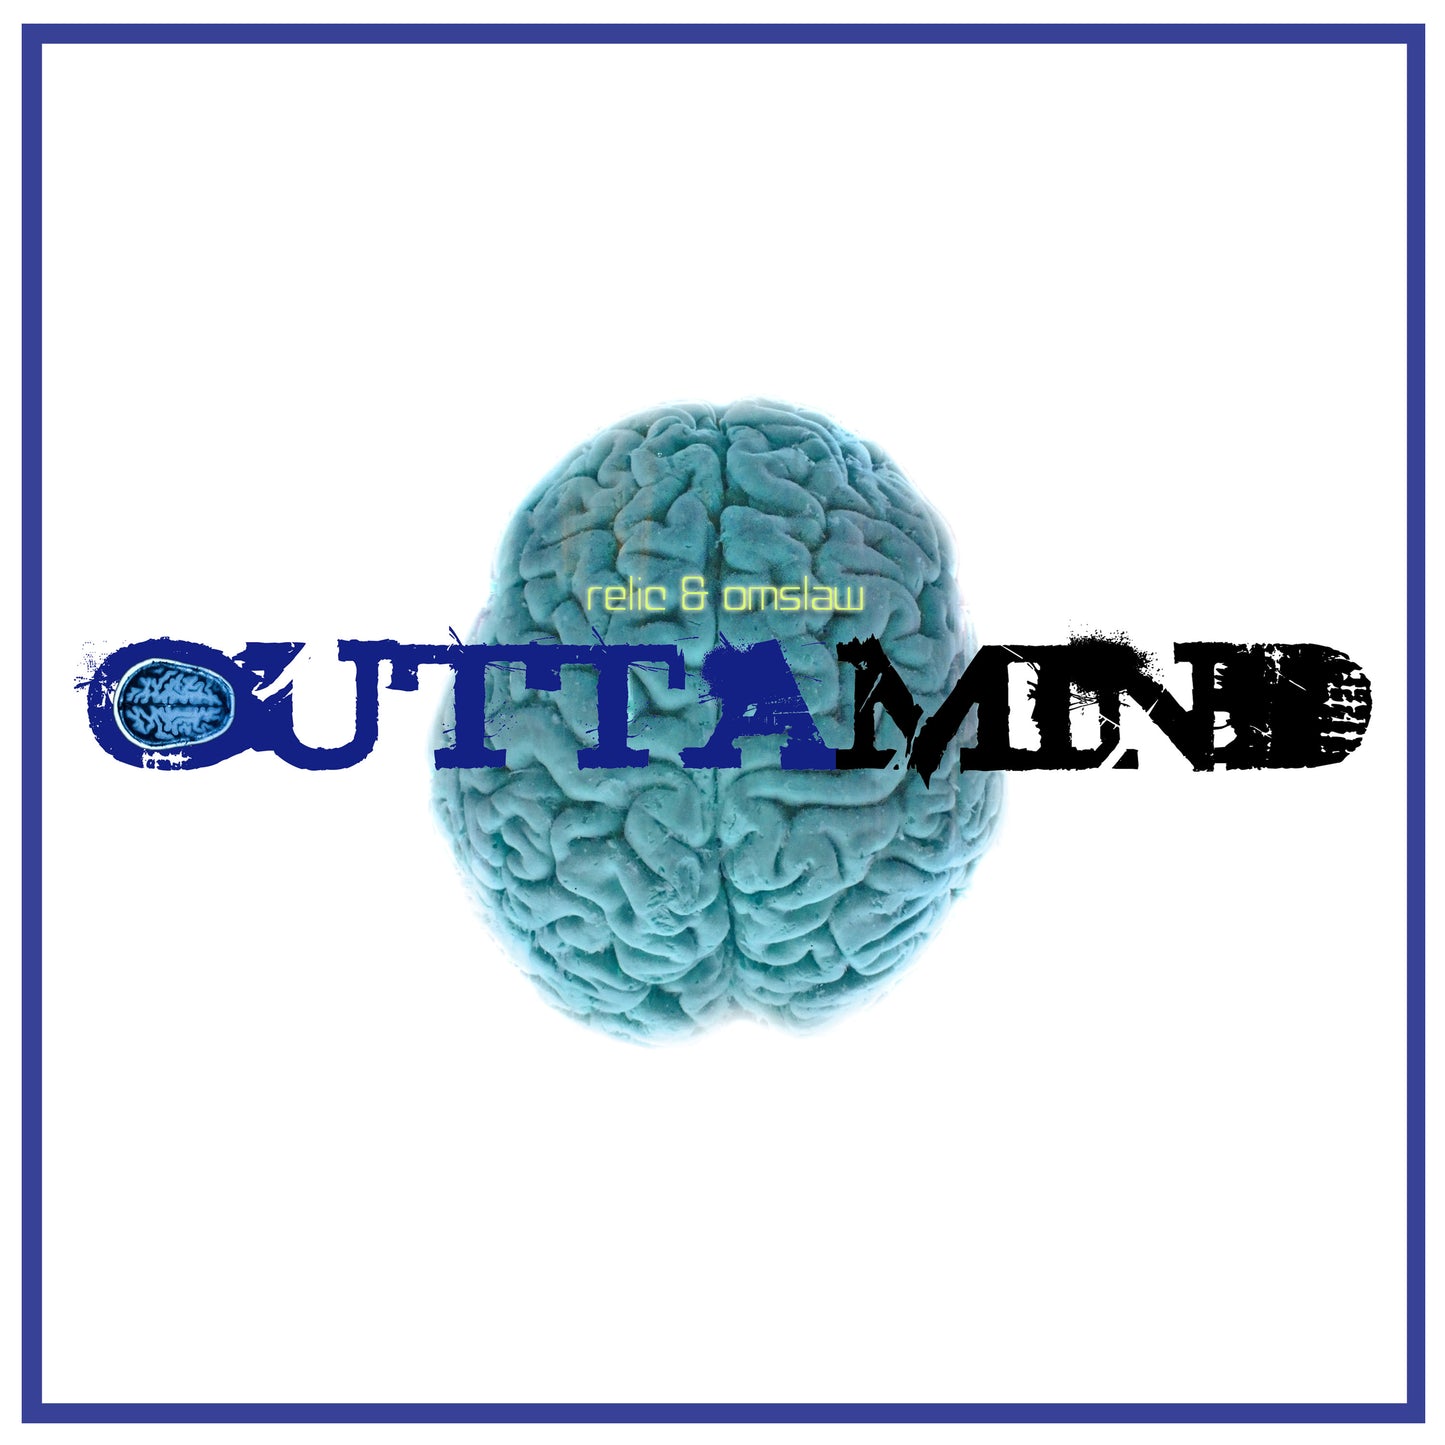 OuttaMind Digital EP